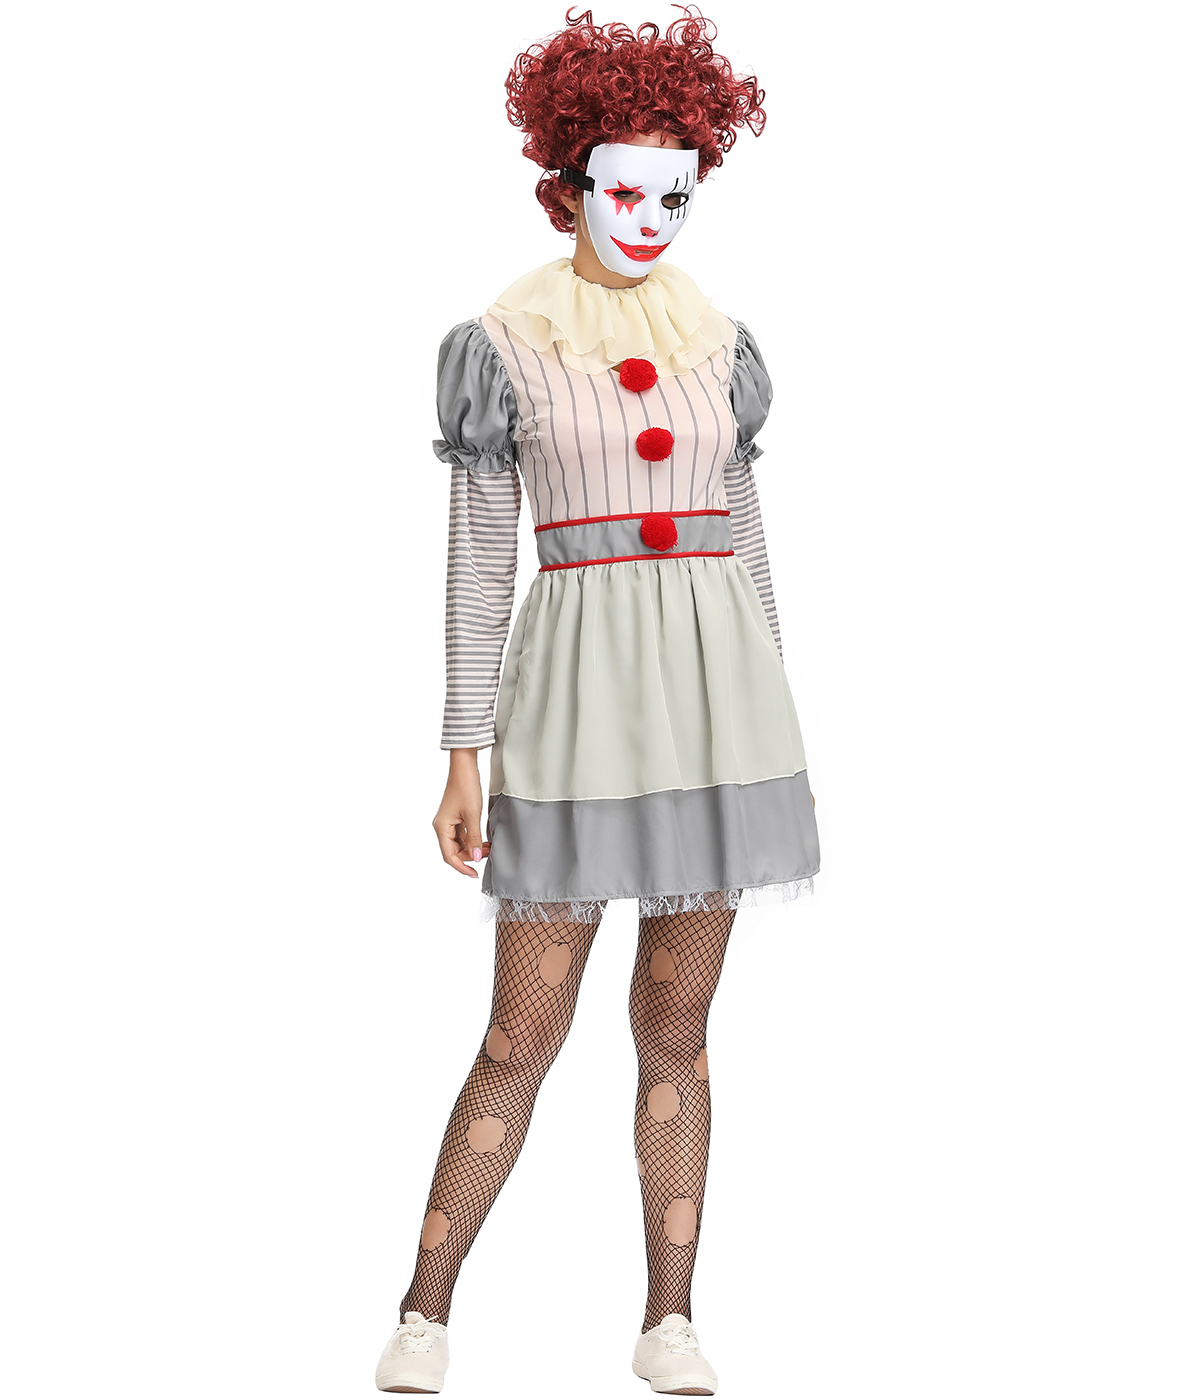 F1917 sexy clown costume for women